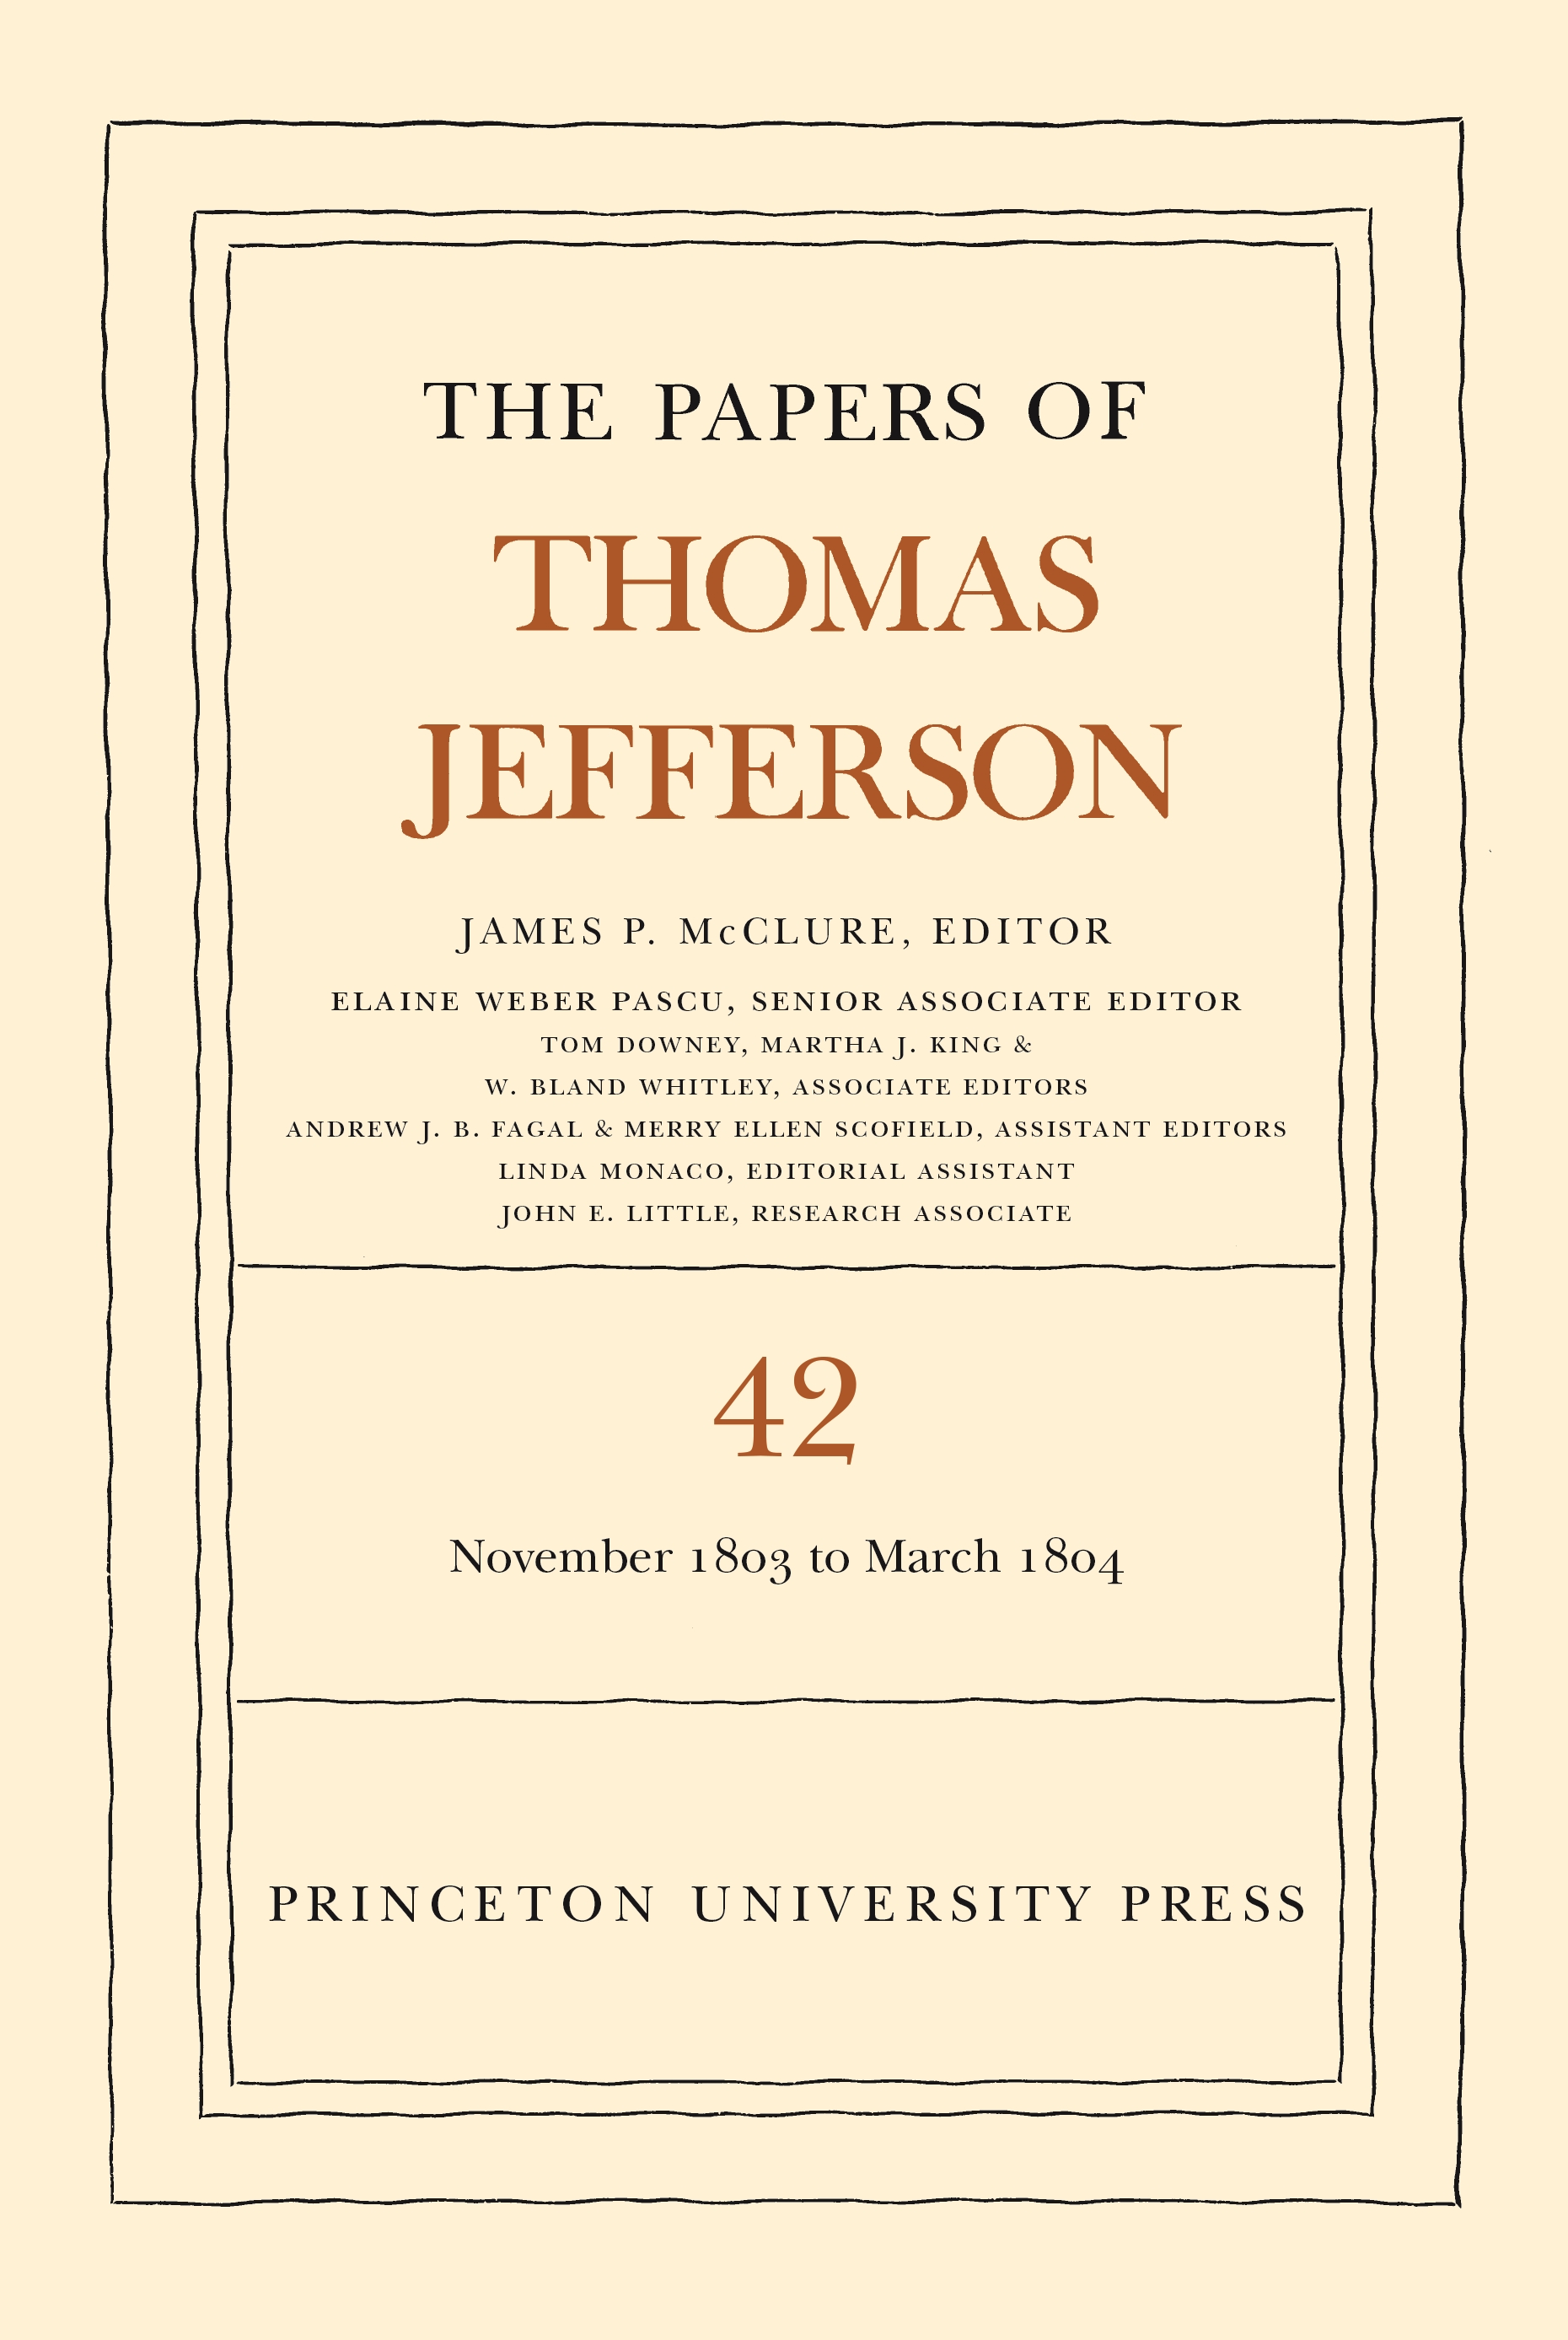 thomas jefferson university supplemental essays